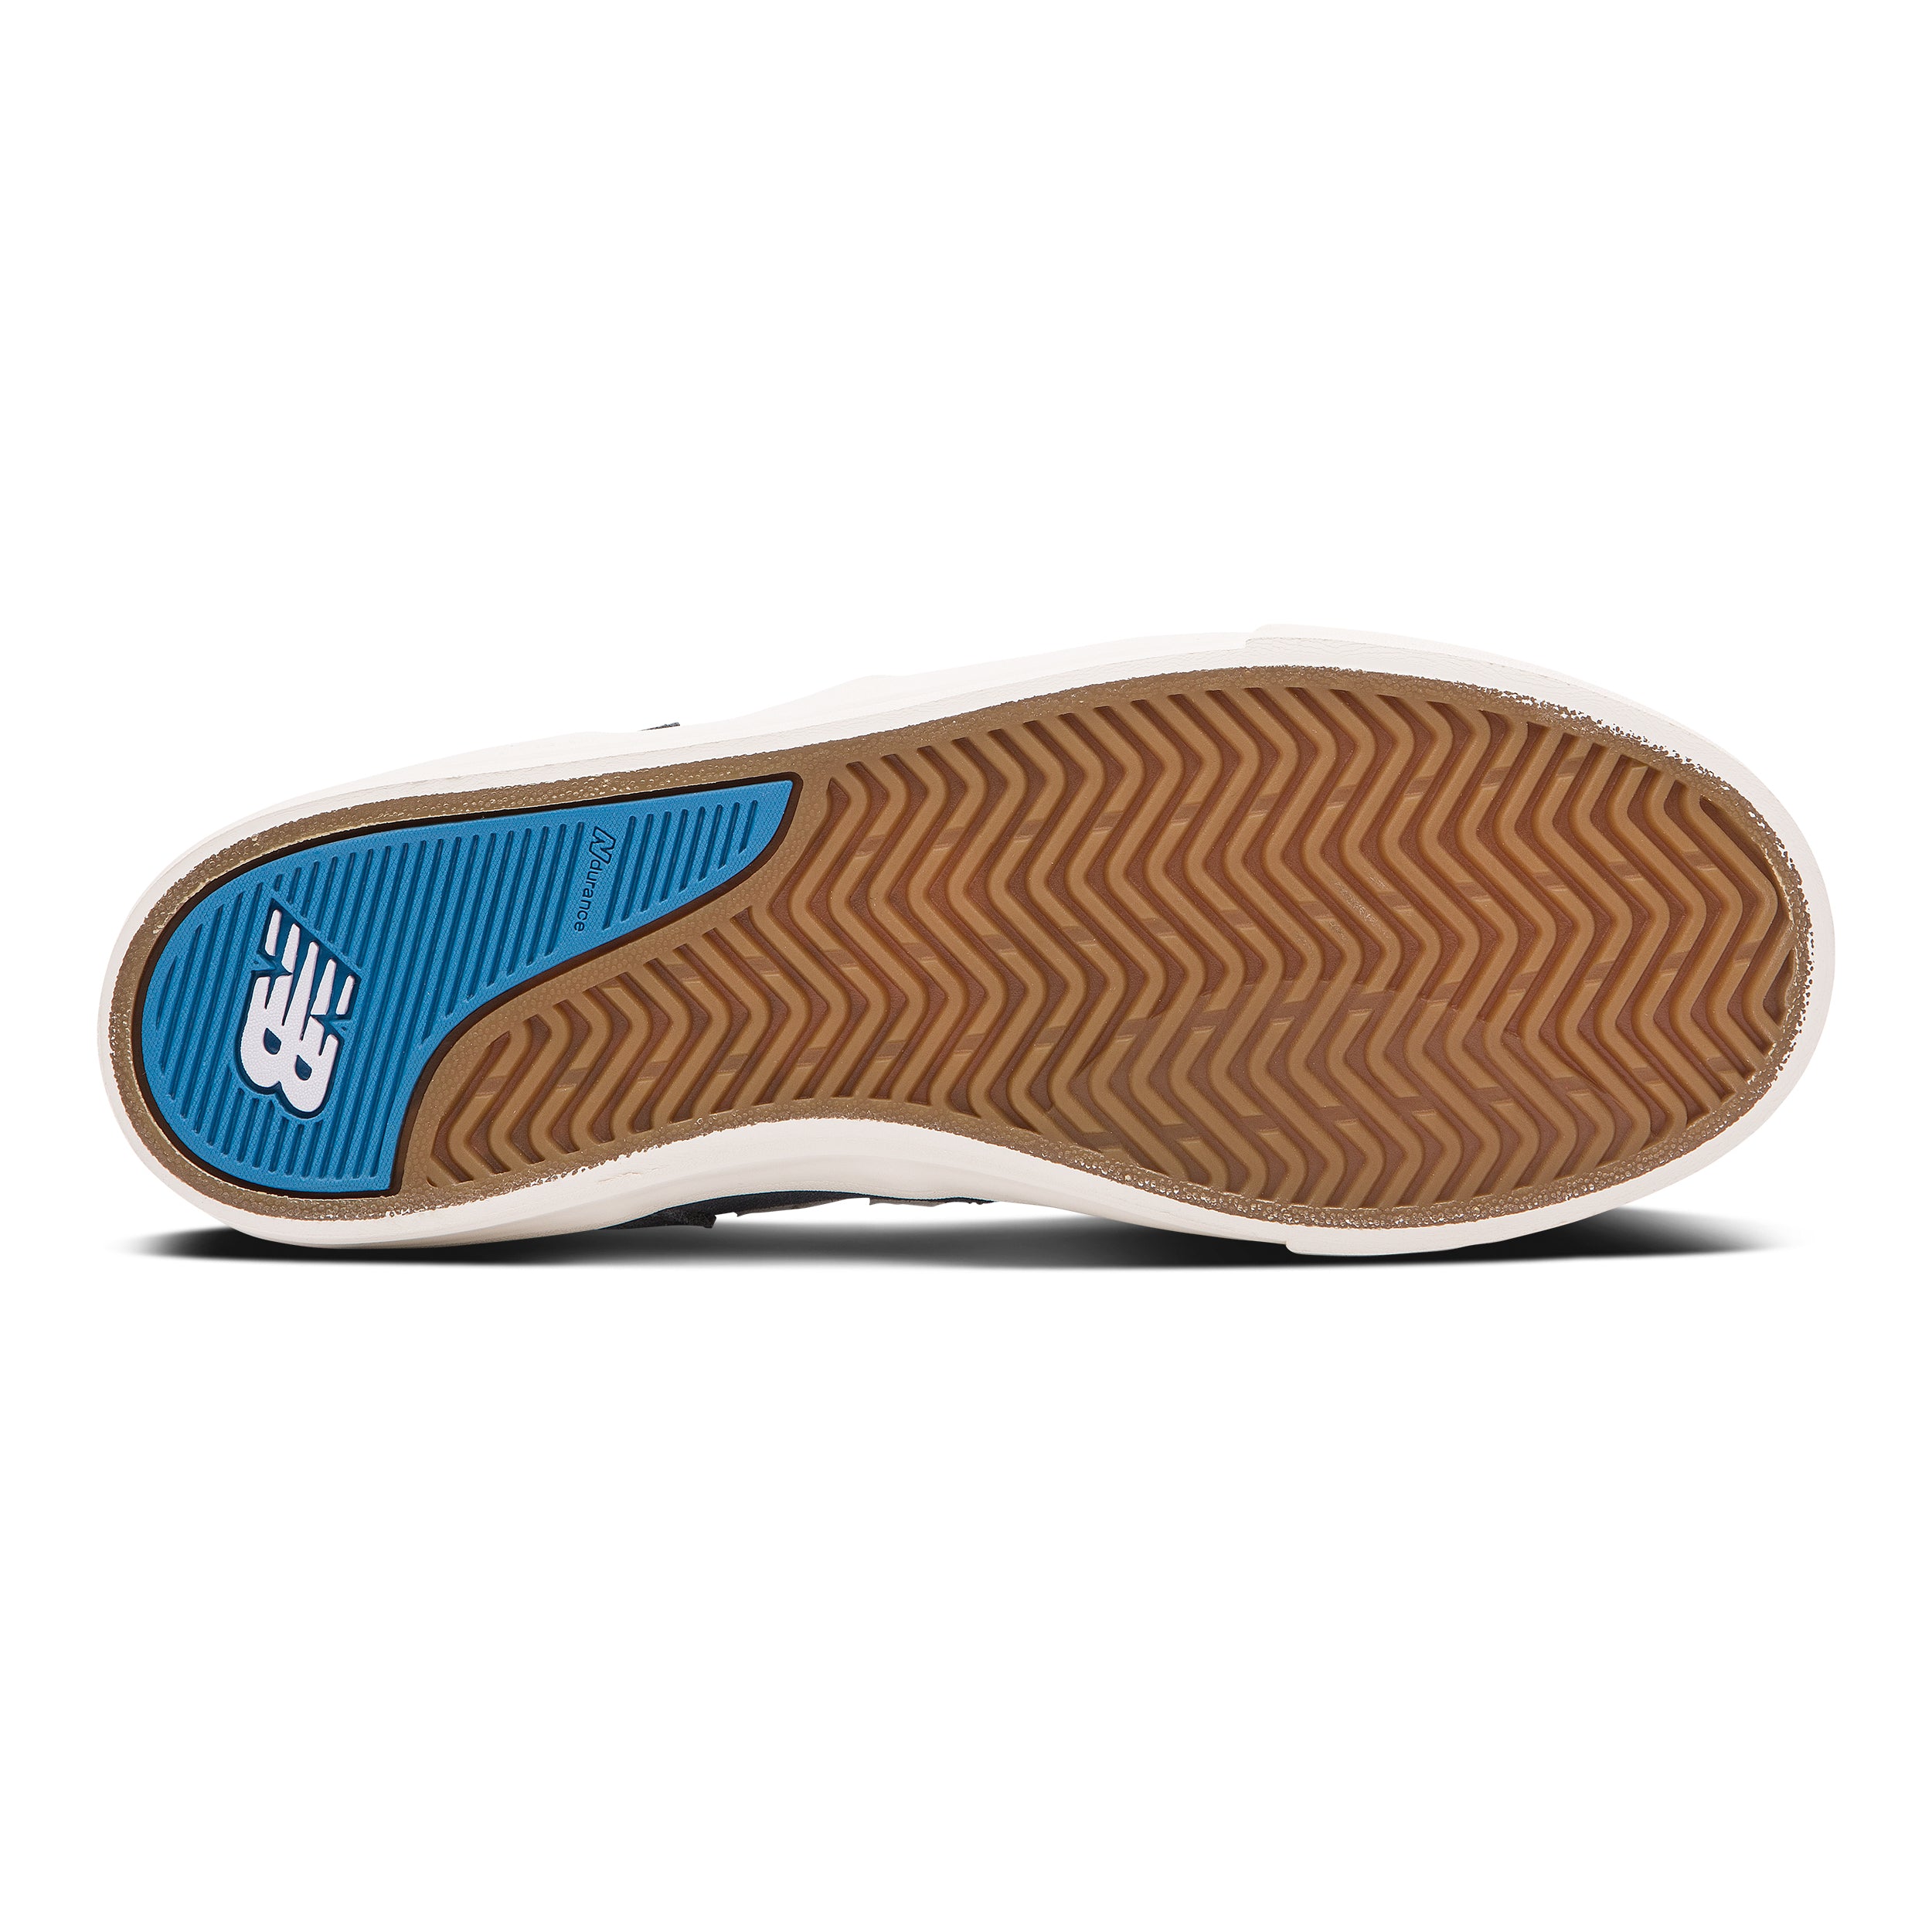 Grey/Blue NM306 Jamie Foy NB Numeric Skateboard Shoe Bottom